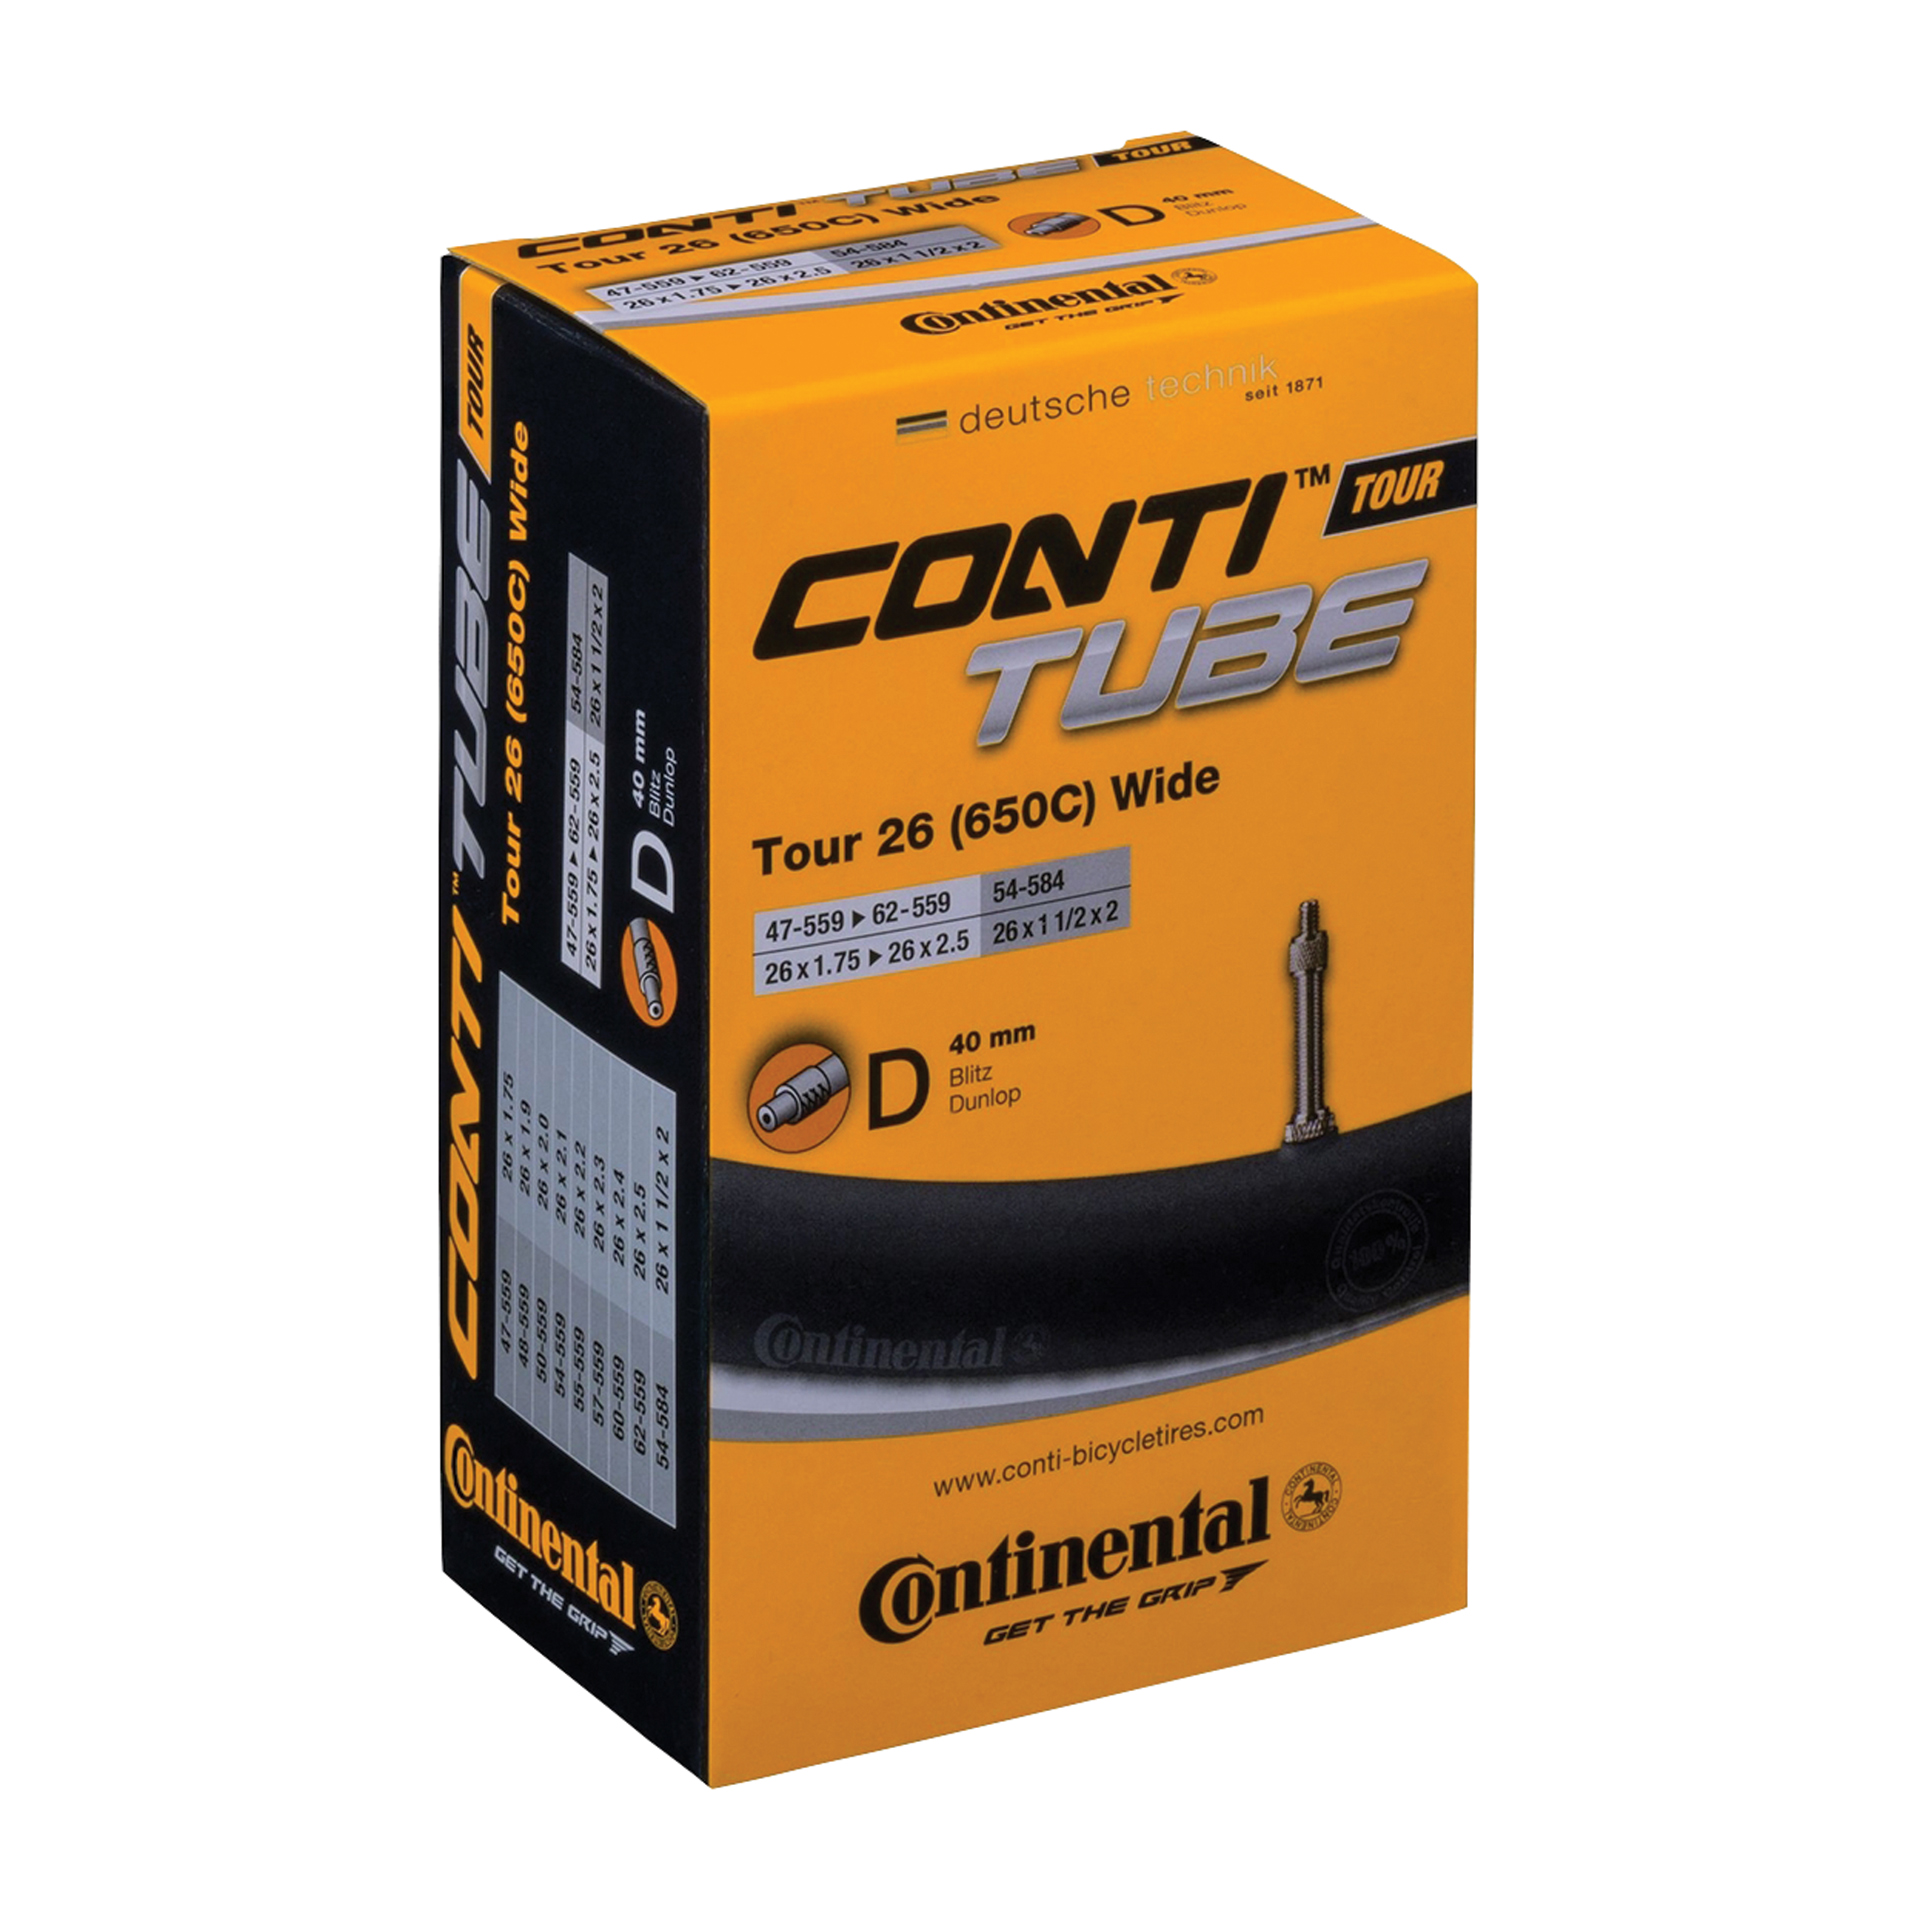 Continental Continental Binnenband Tour 26 Wide 40mm DV 5036707